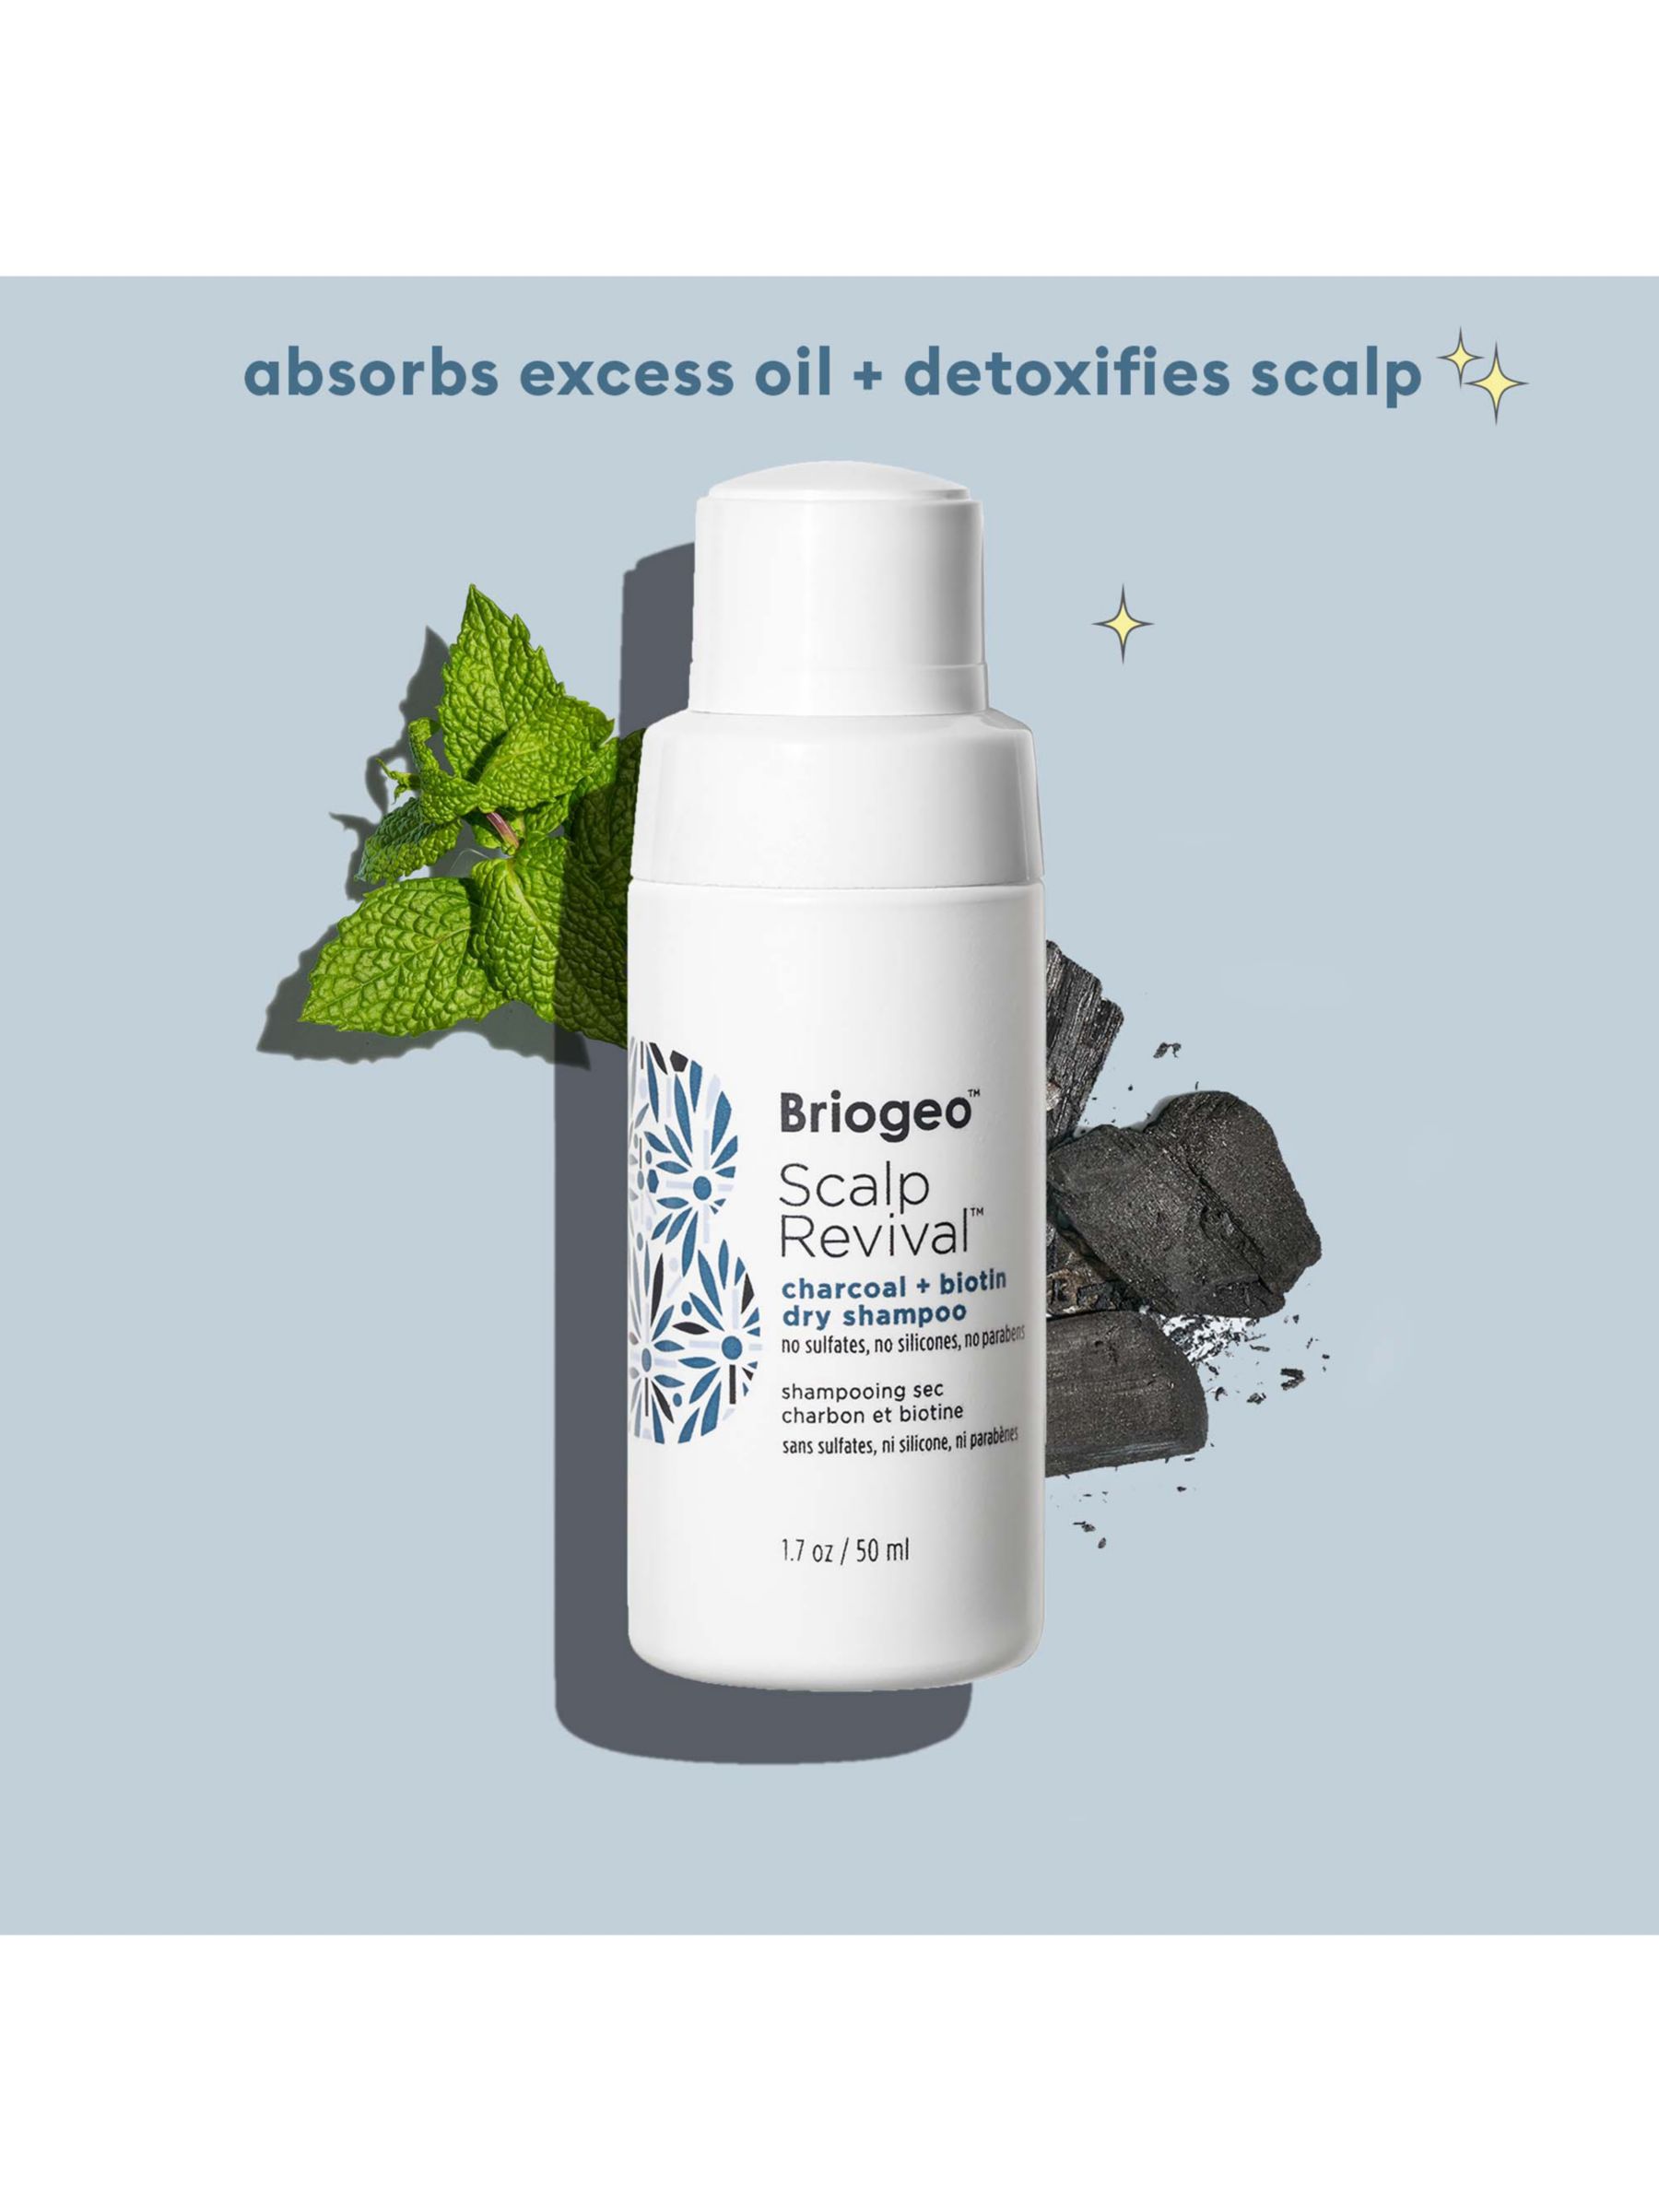 Briogeo Scalp Revival™ Charcoal + Biotin Dry Shampoo, 50ml 3